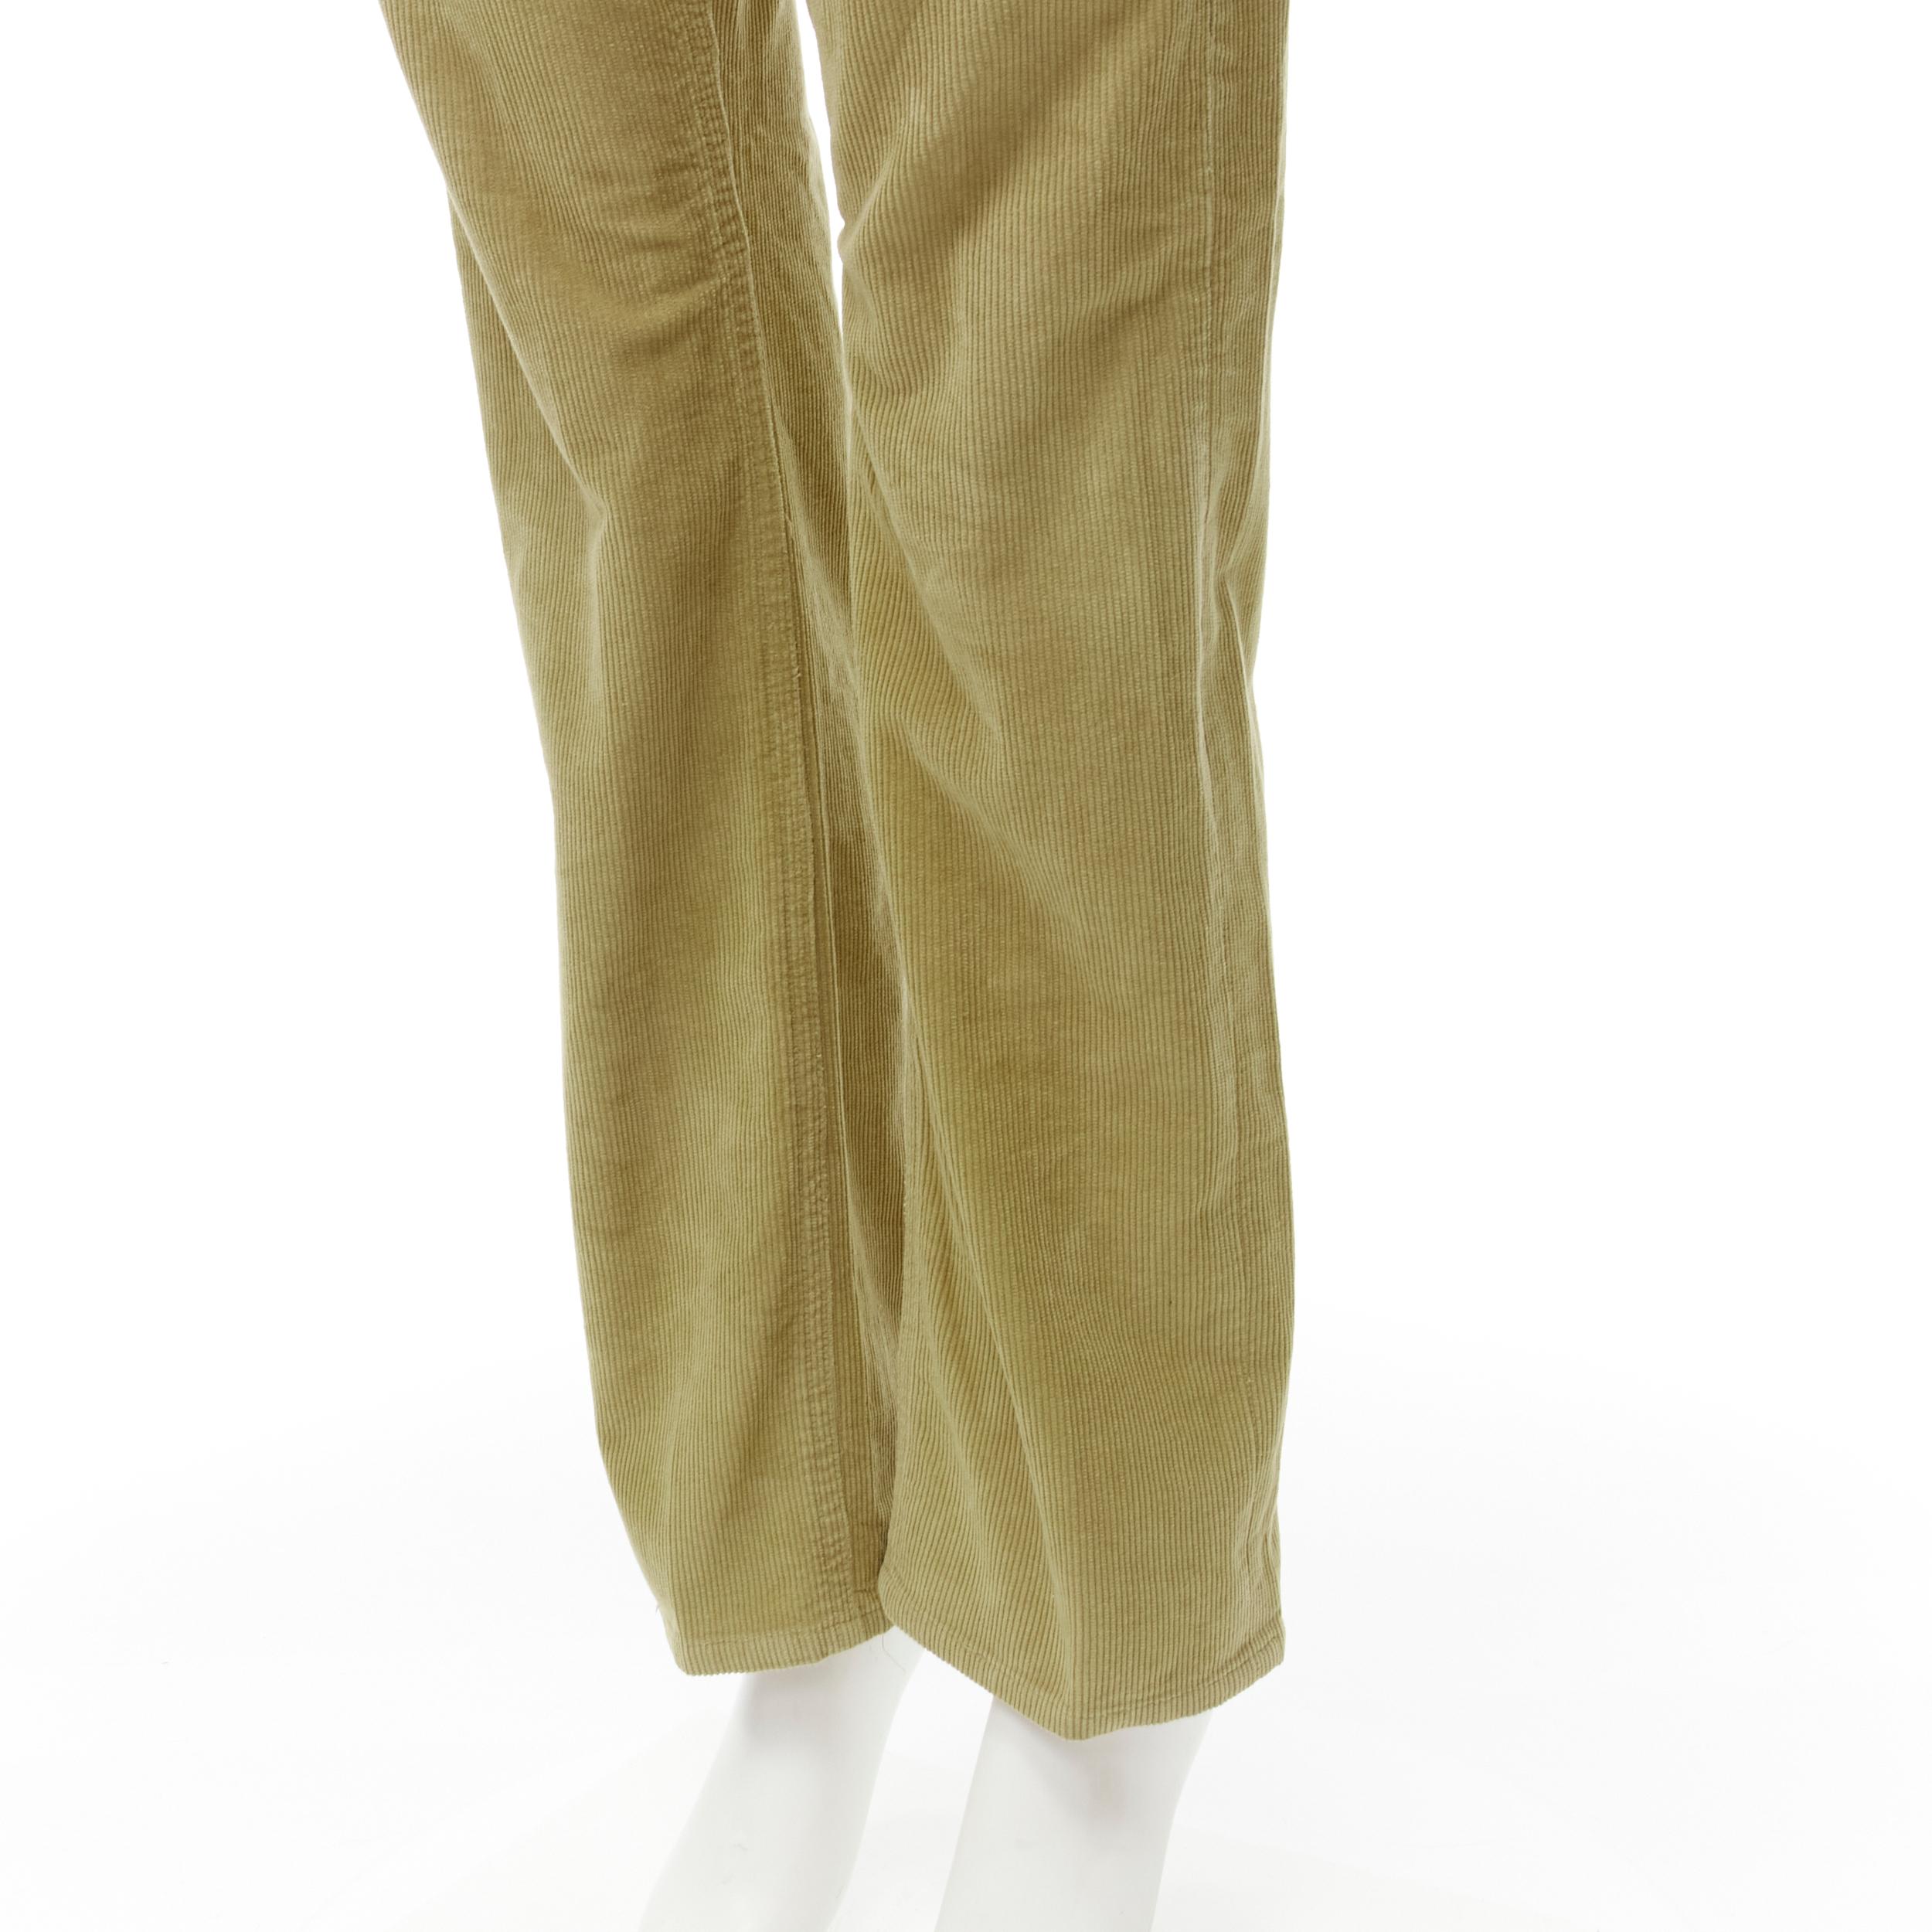 MIU MIU Vintage Velluto khaki cotton corduroy straight leg casual pants 29